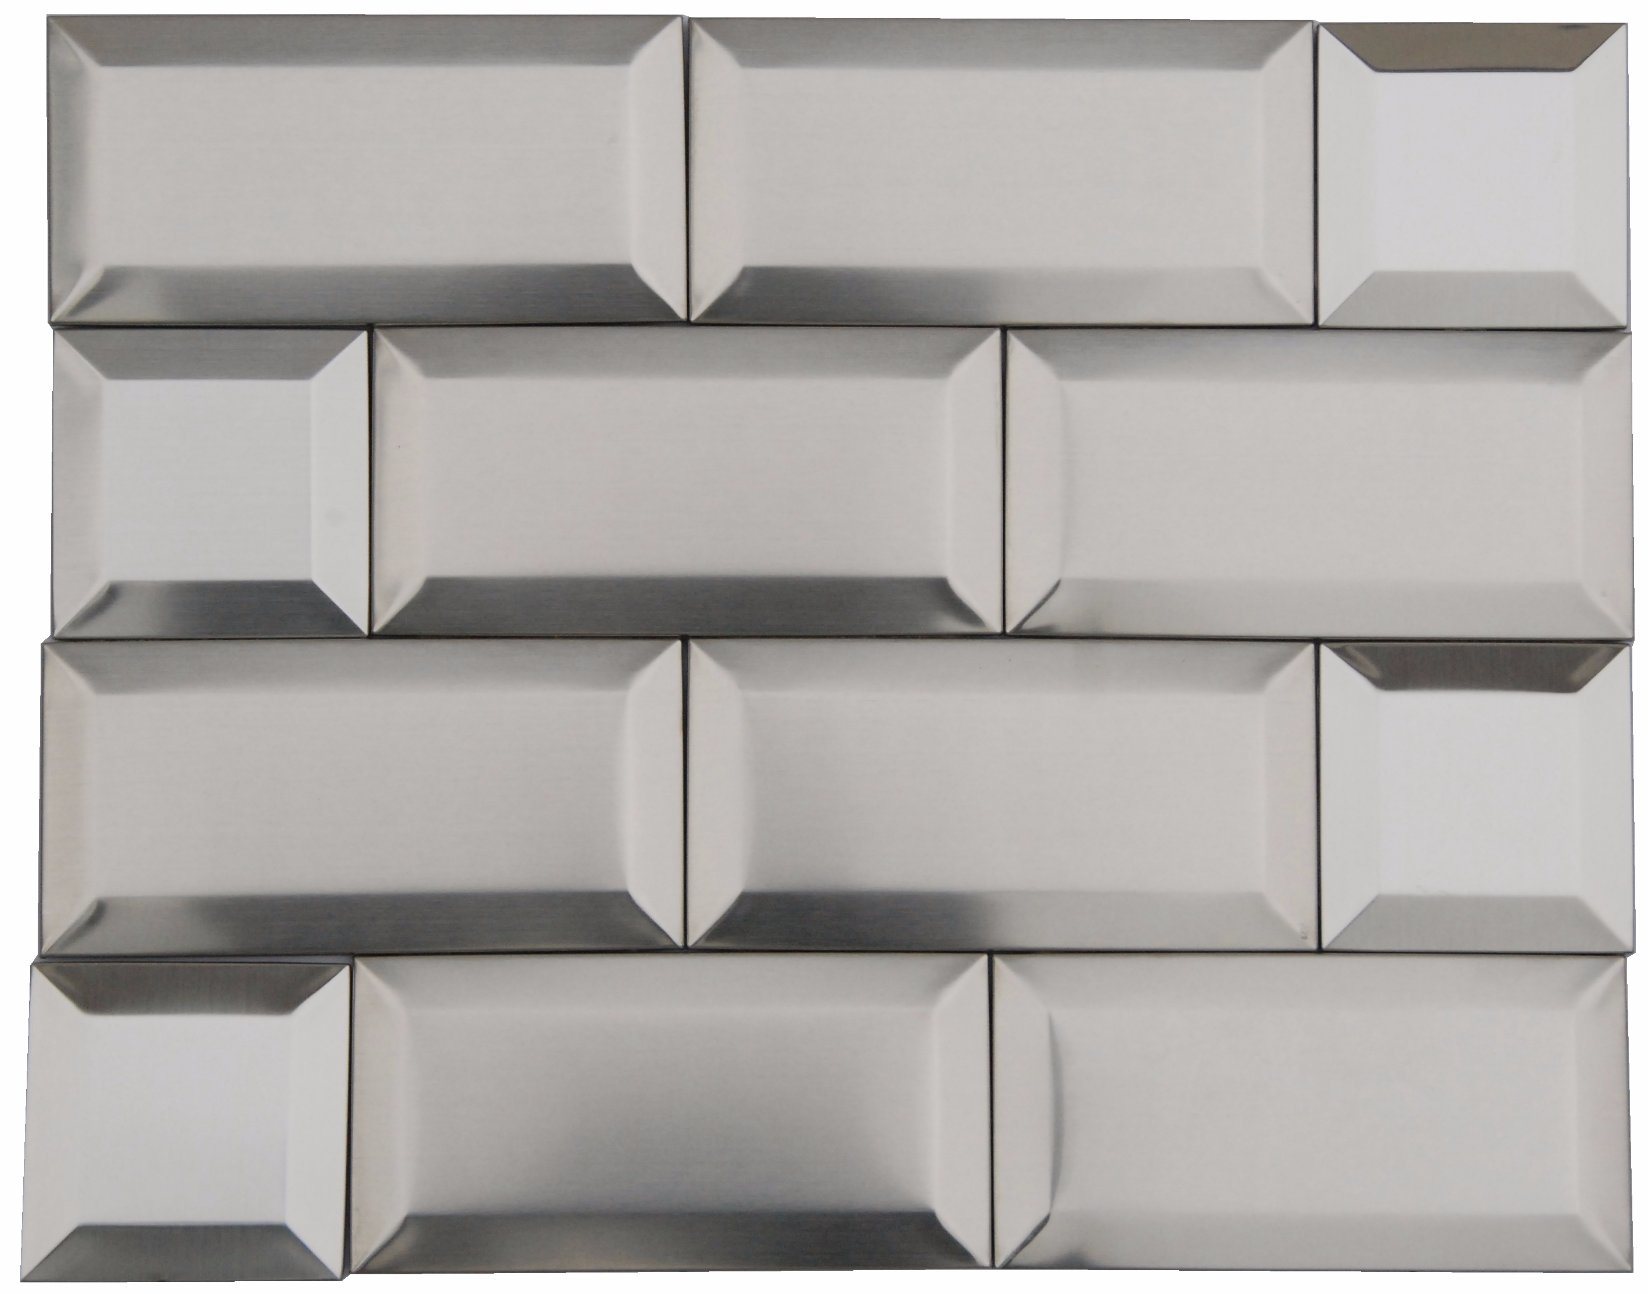 Silver Brick Shape Metal Mosaic Tile (YGS052-1)